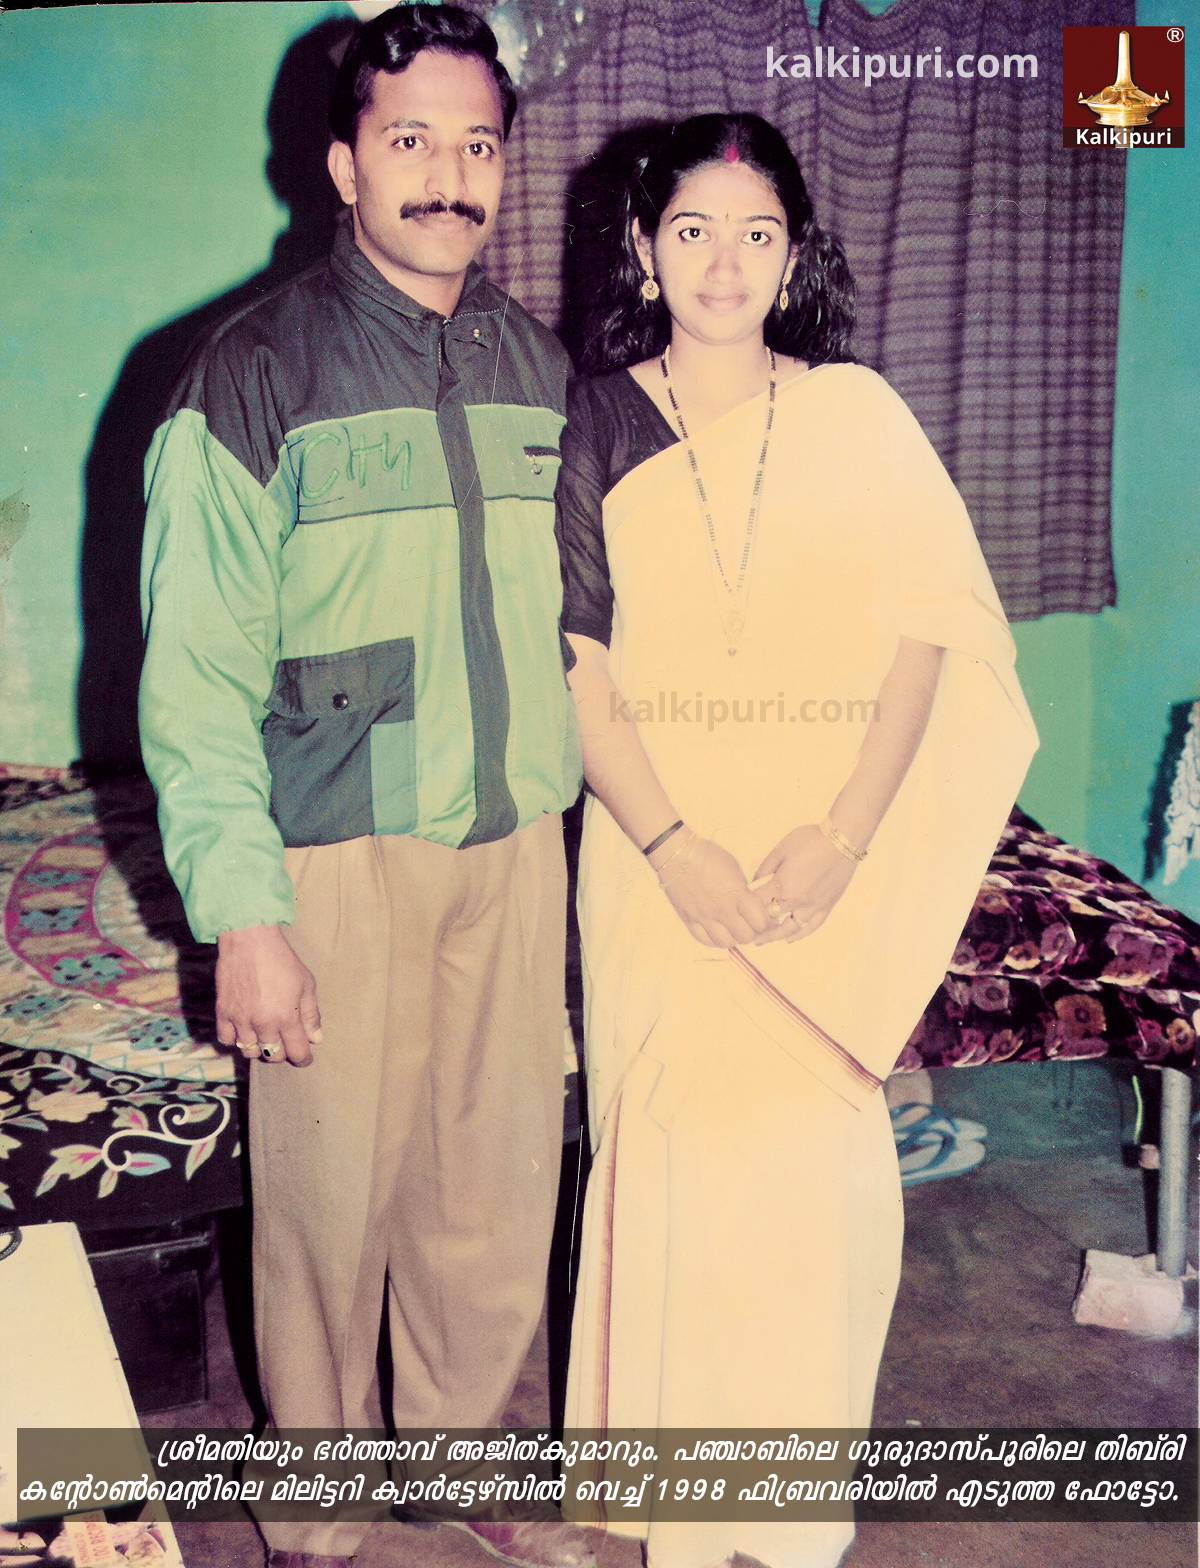 Sreemathy with her husband Ajitkumar